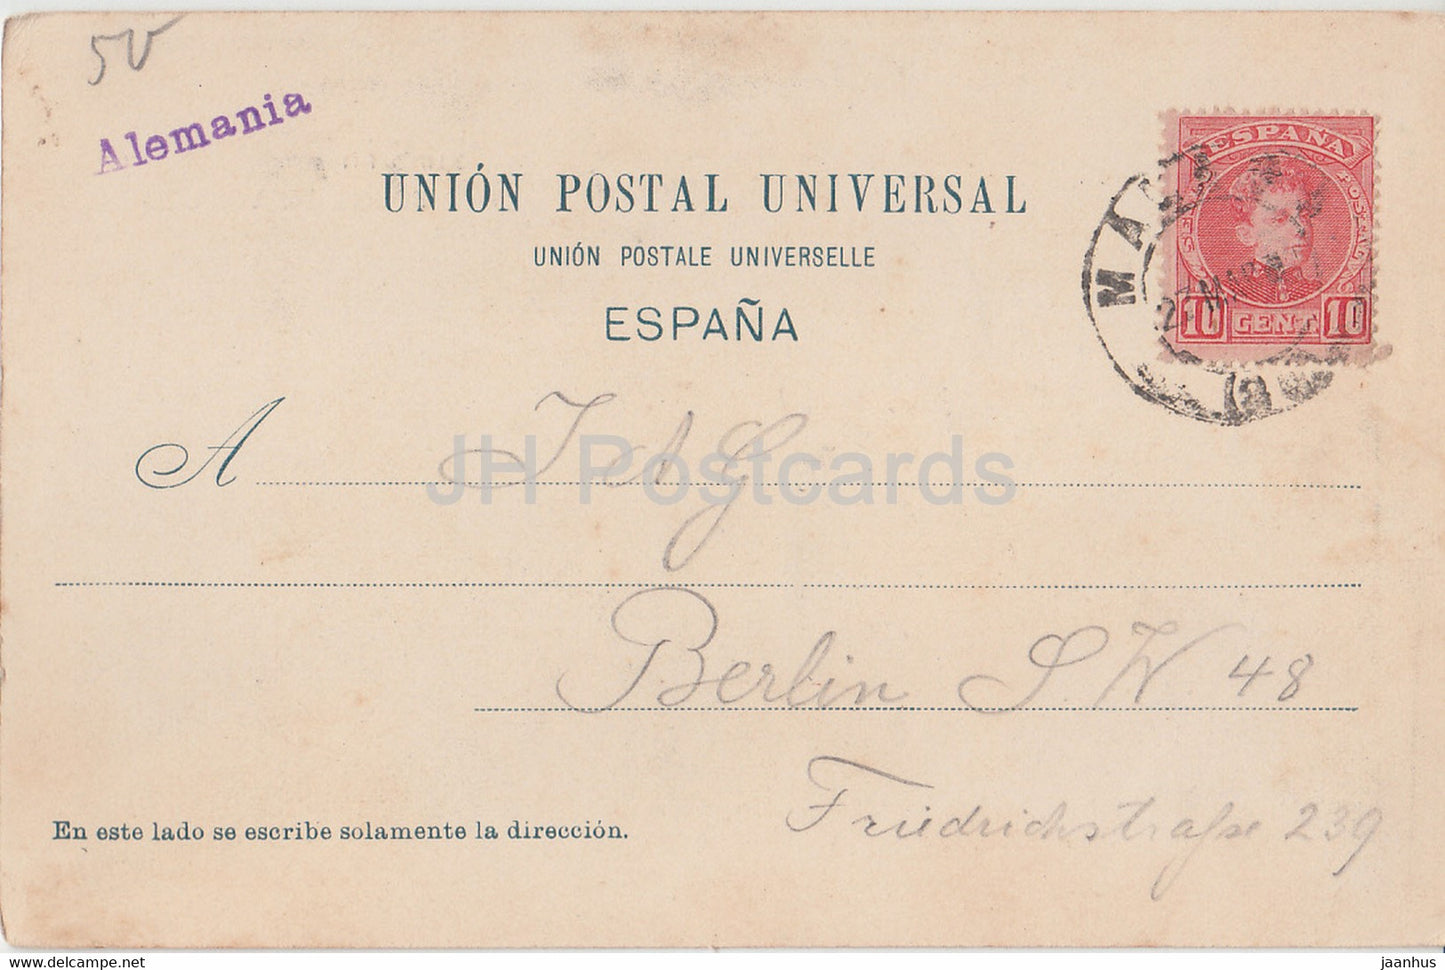 Corrida de Toros - Un Quite - 210 - alte Postkarte - Spanien - gebraucht